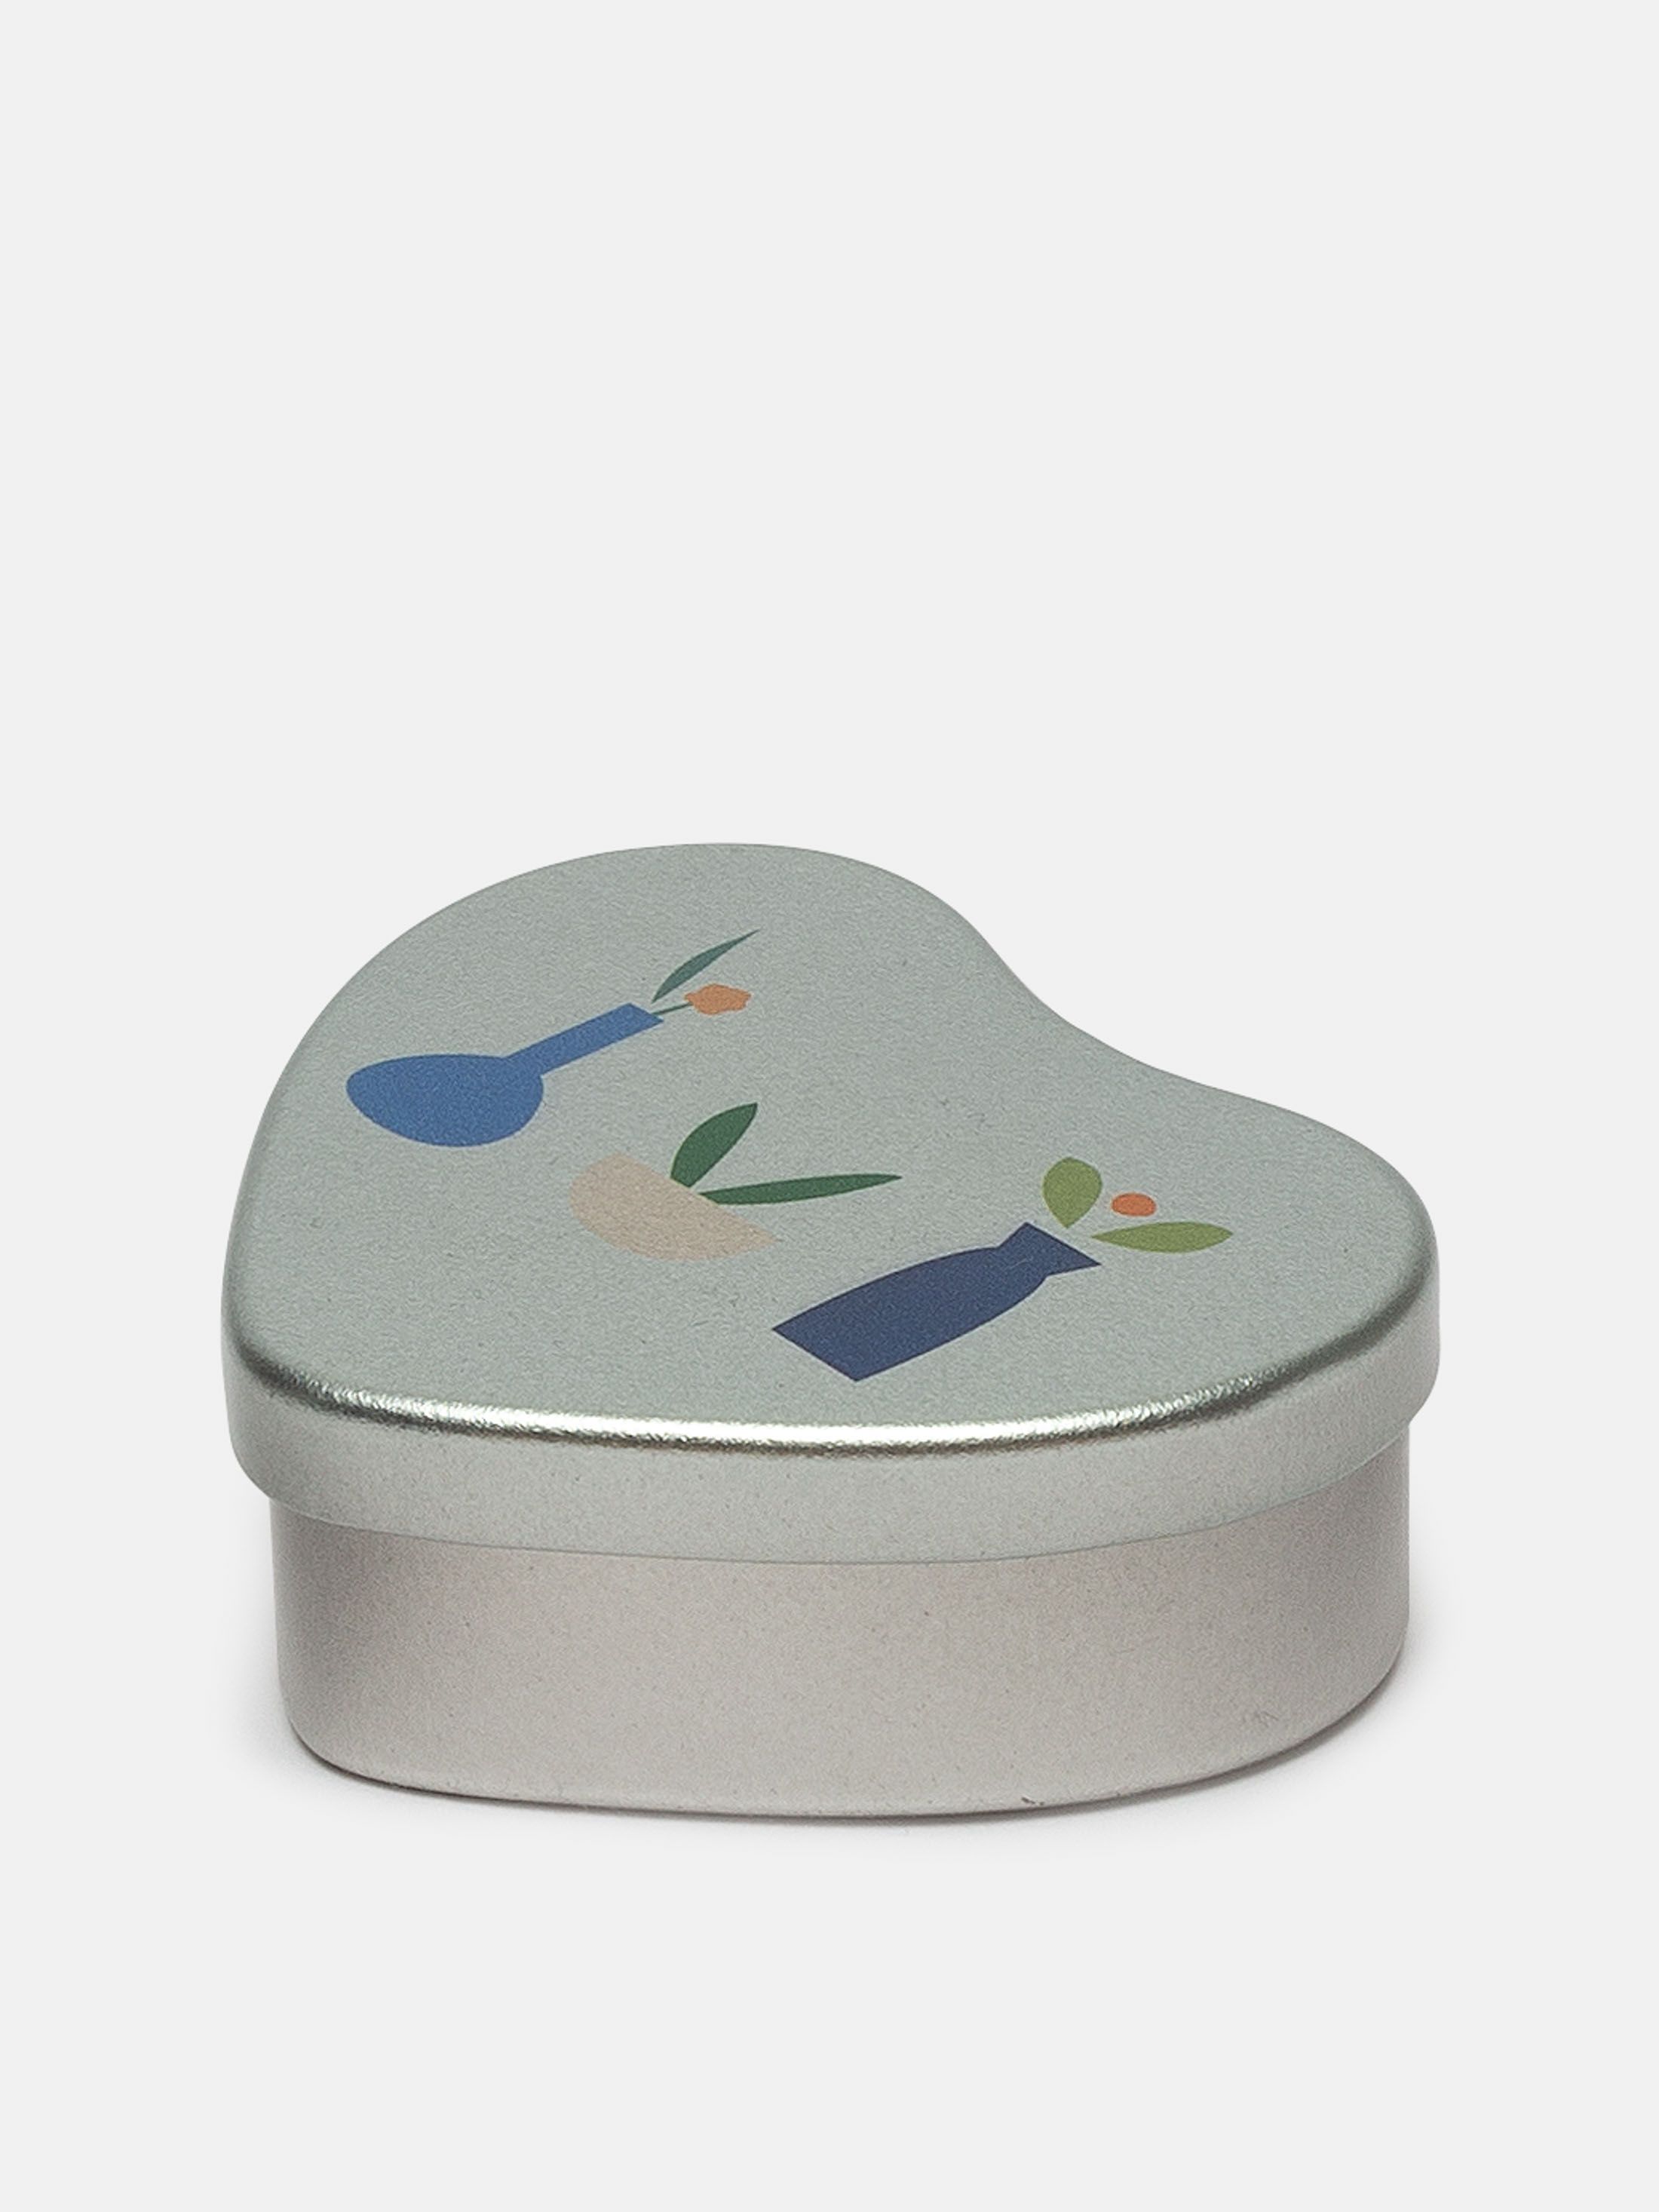 heart shaped tin lid details